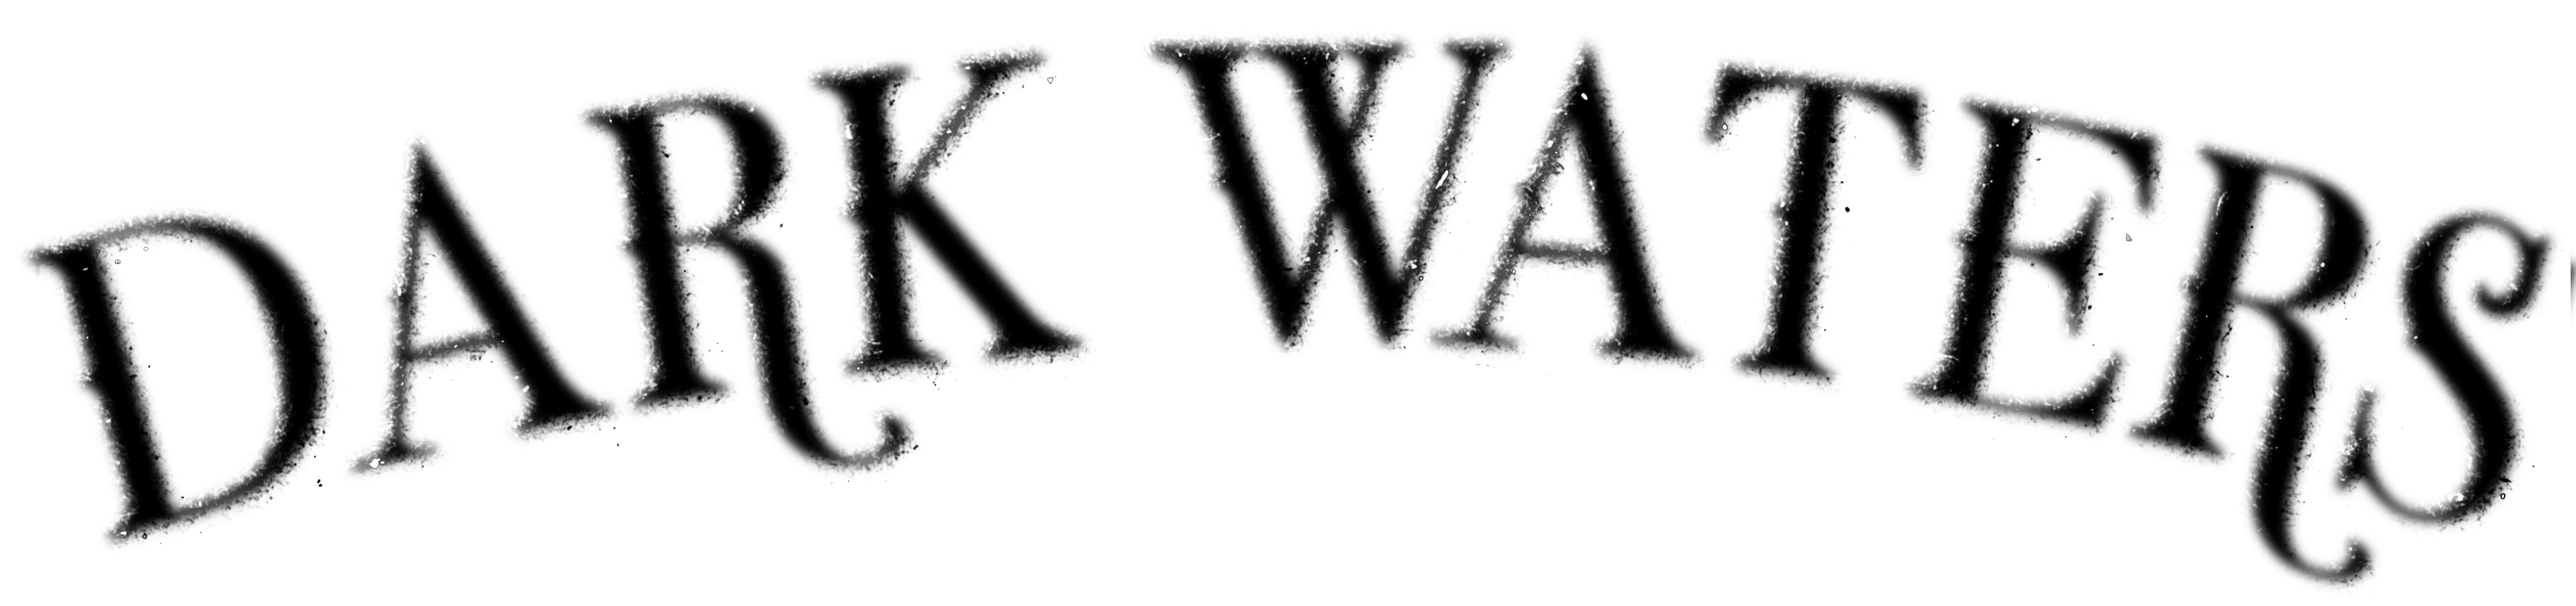 Dark Waters logo